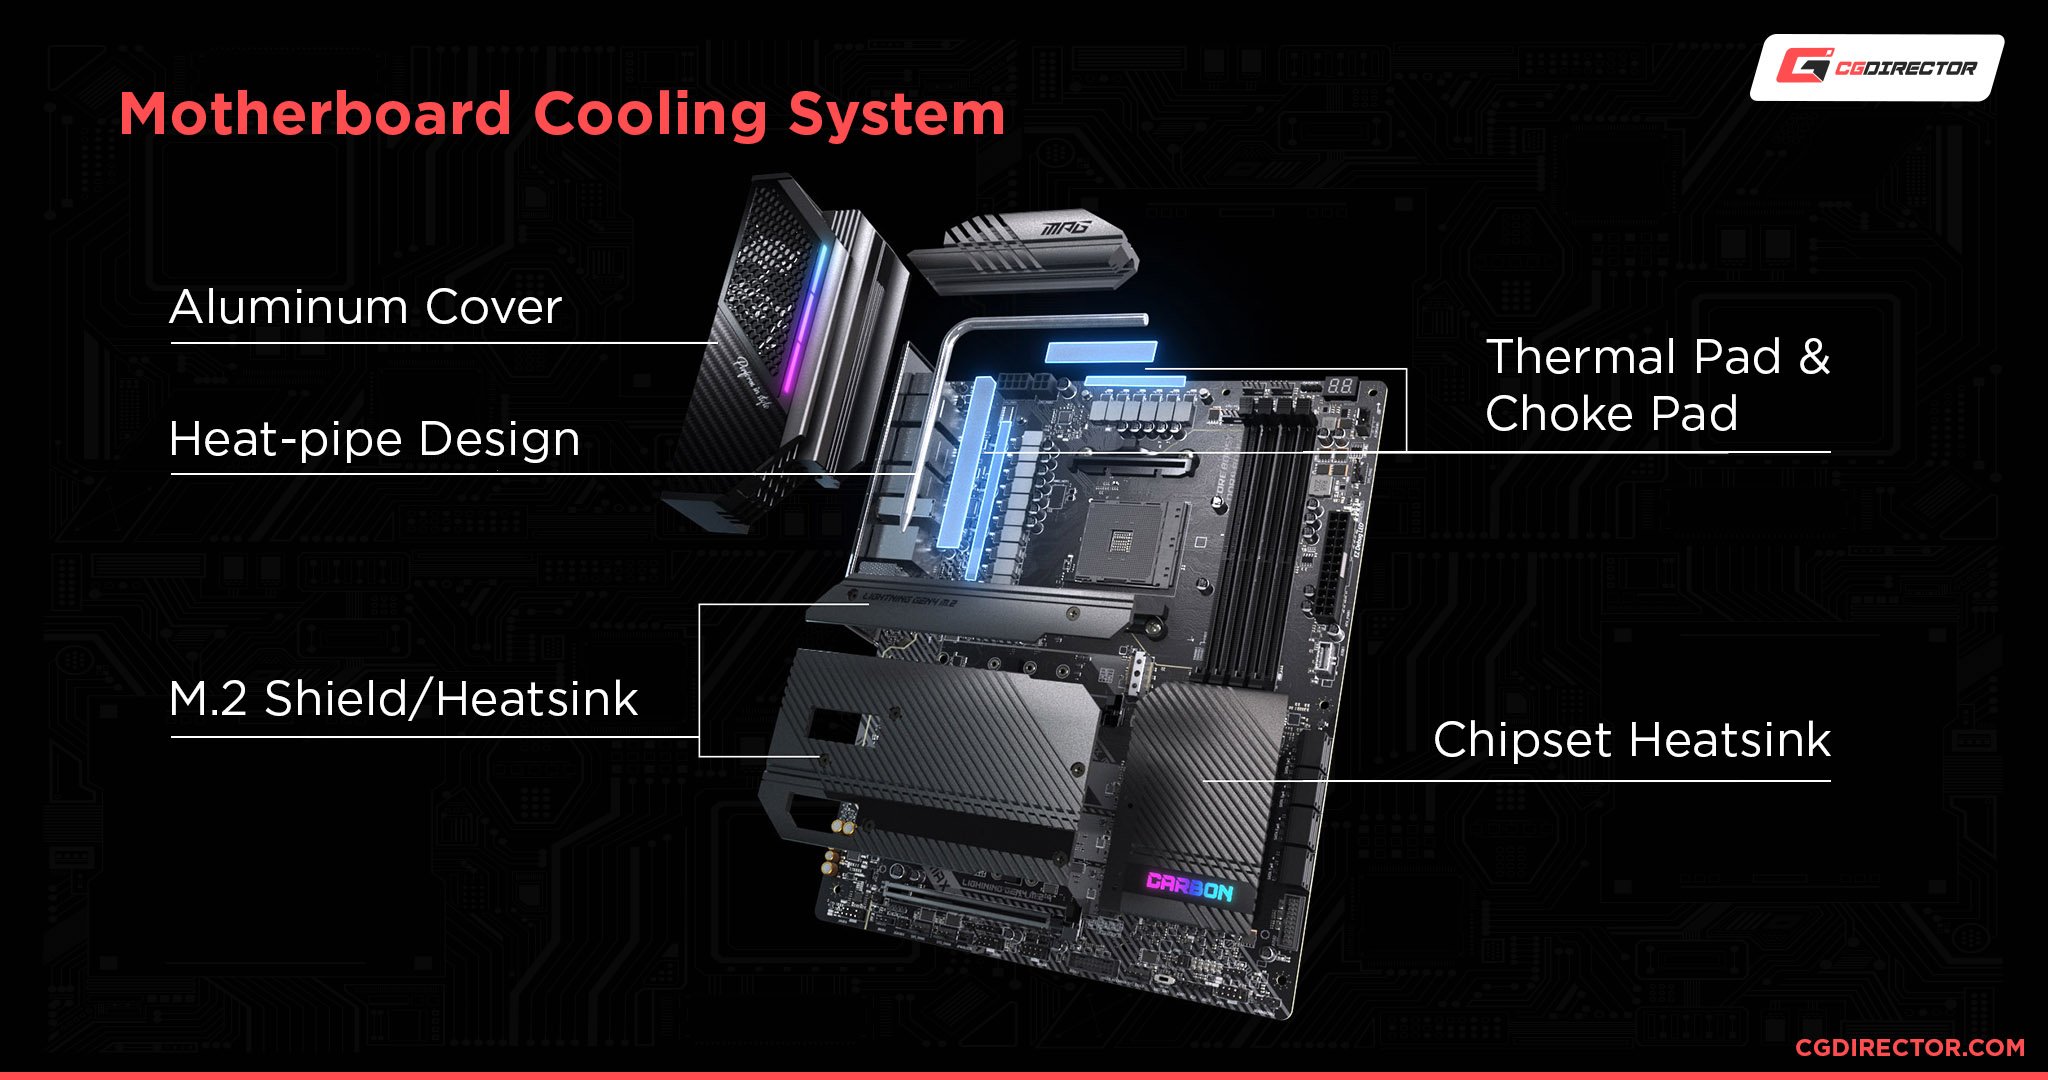 Motherboard Cooling System